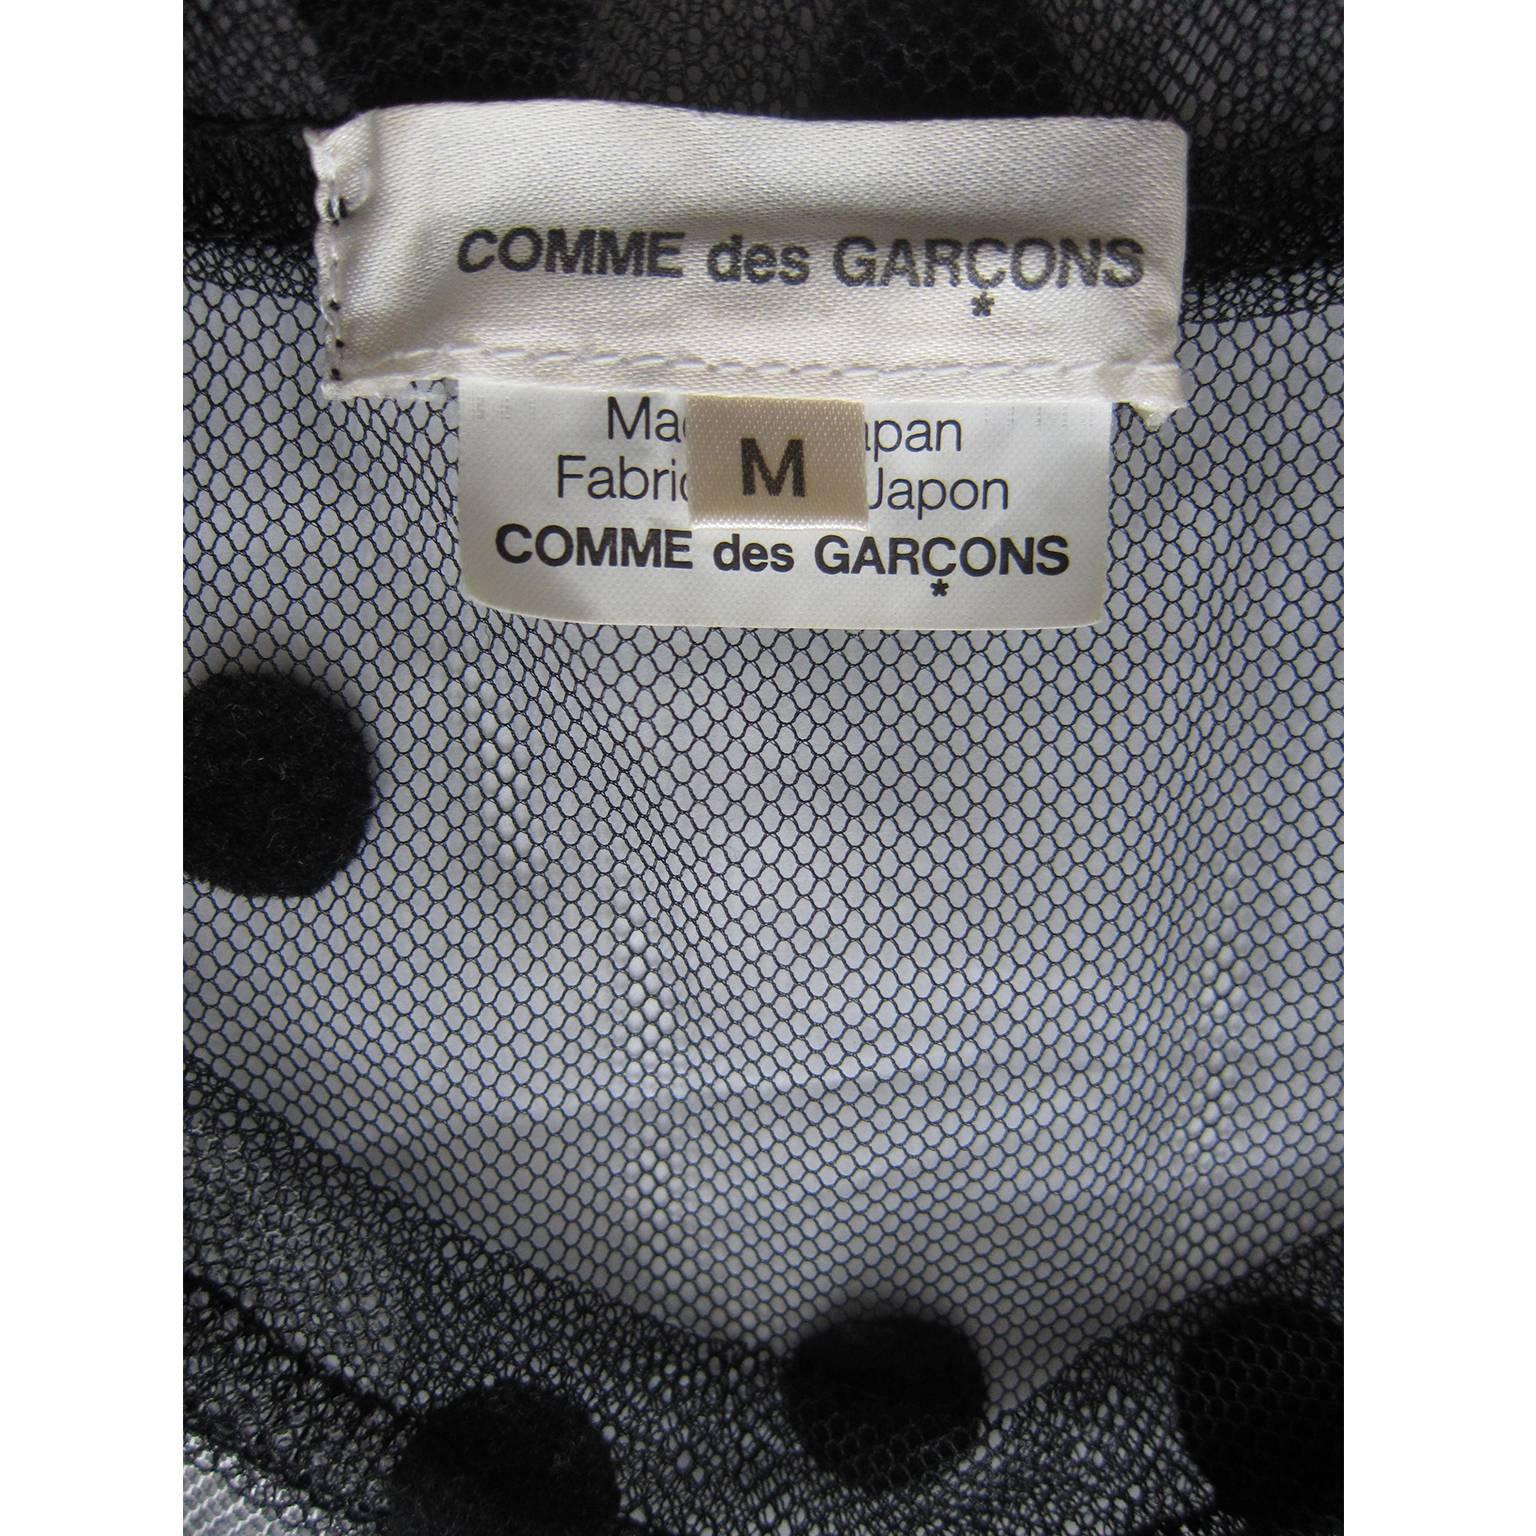 Comme des Garcons Tulle T shirt AD 2005 For Sale 1